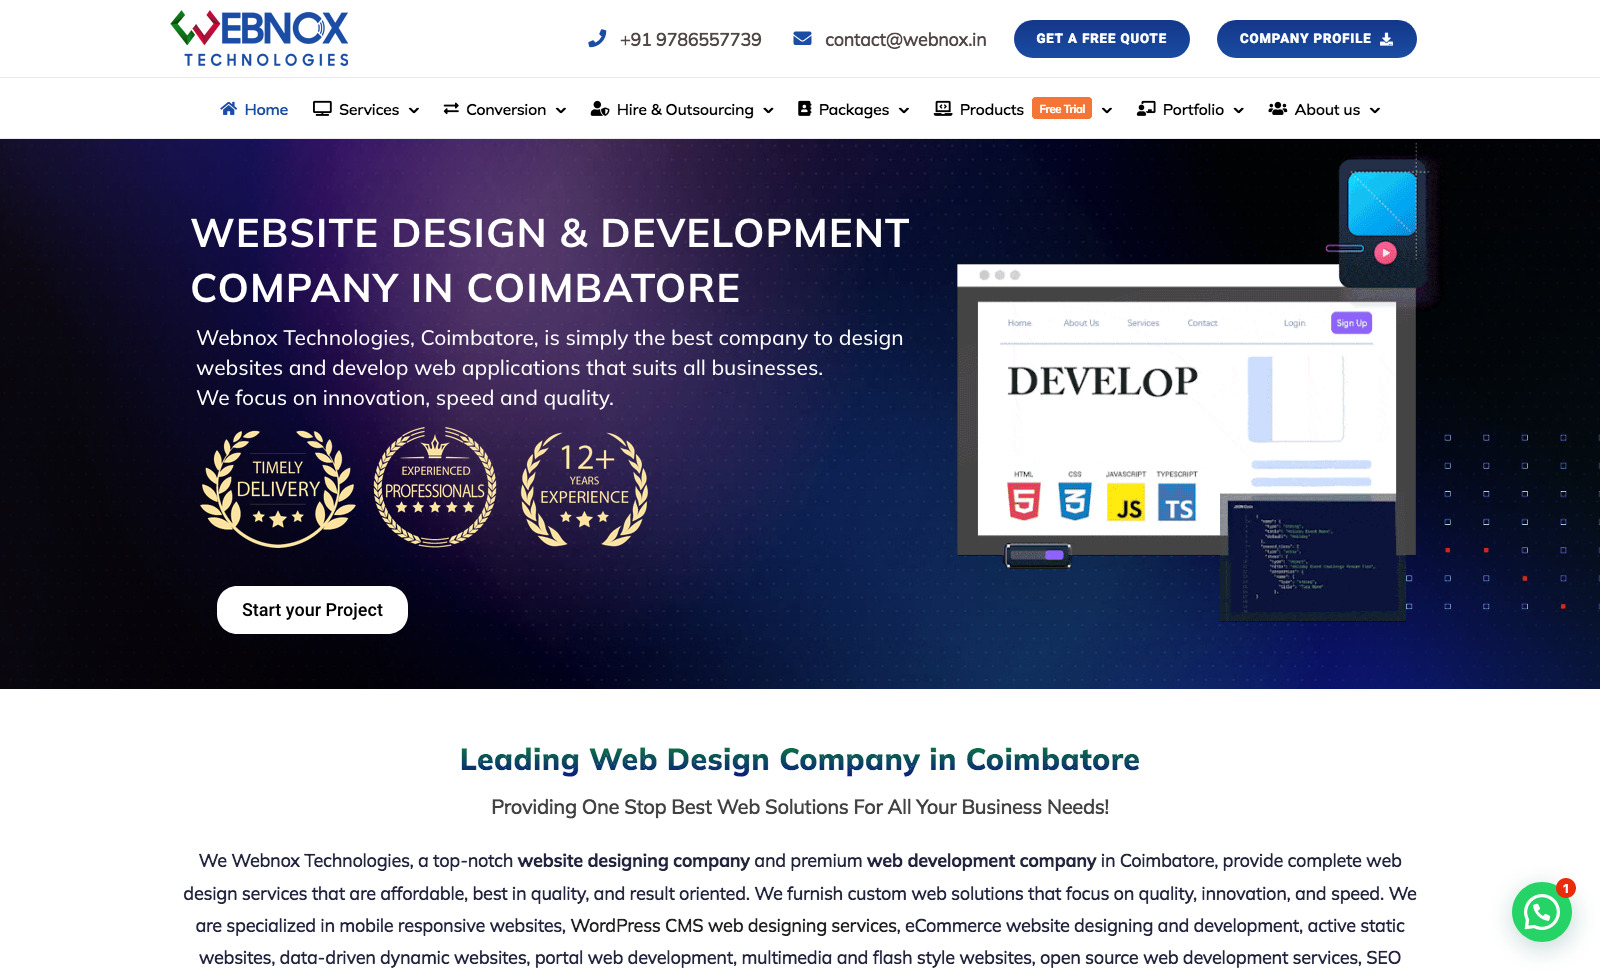 Webnox Technologies